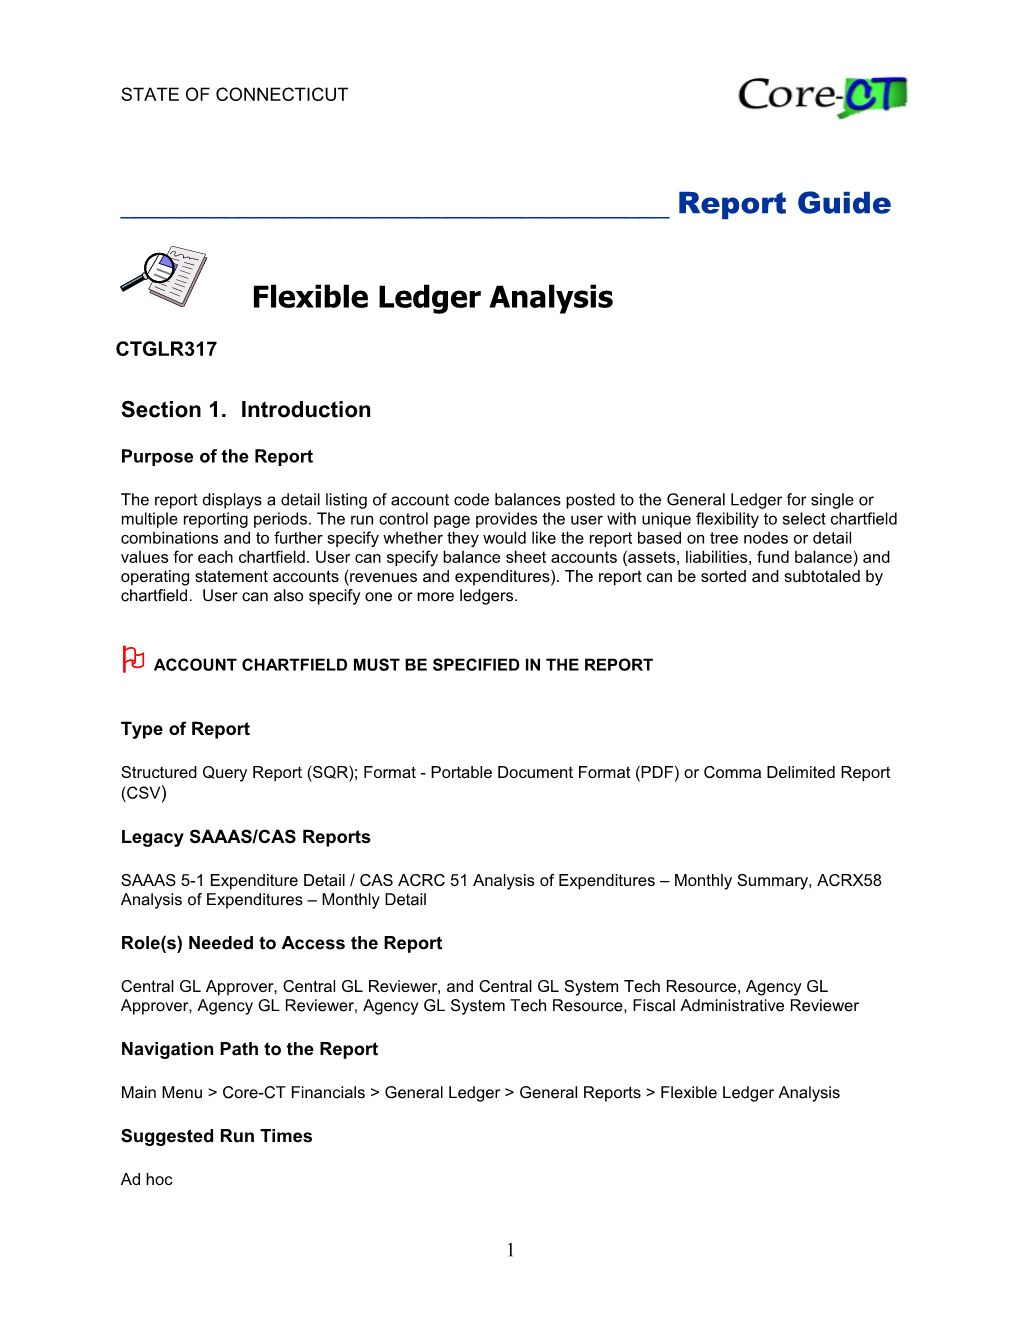 Flexible Ledger Analysis (CTGLR317)